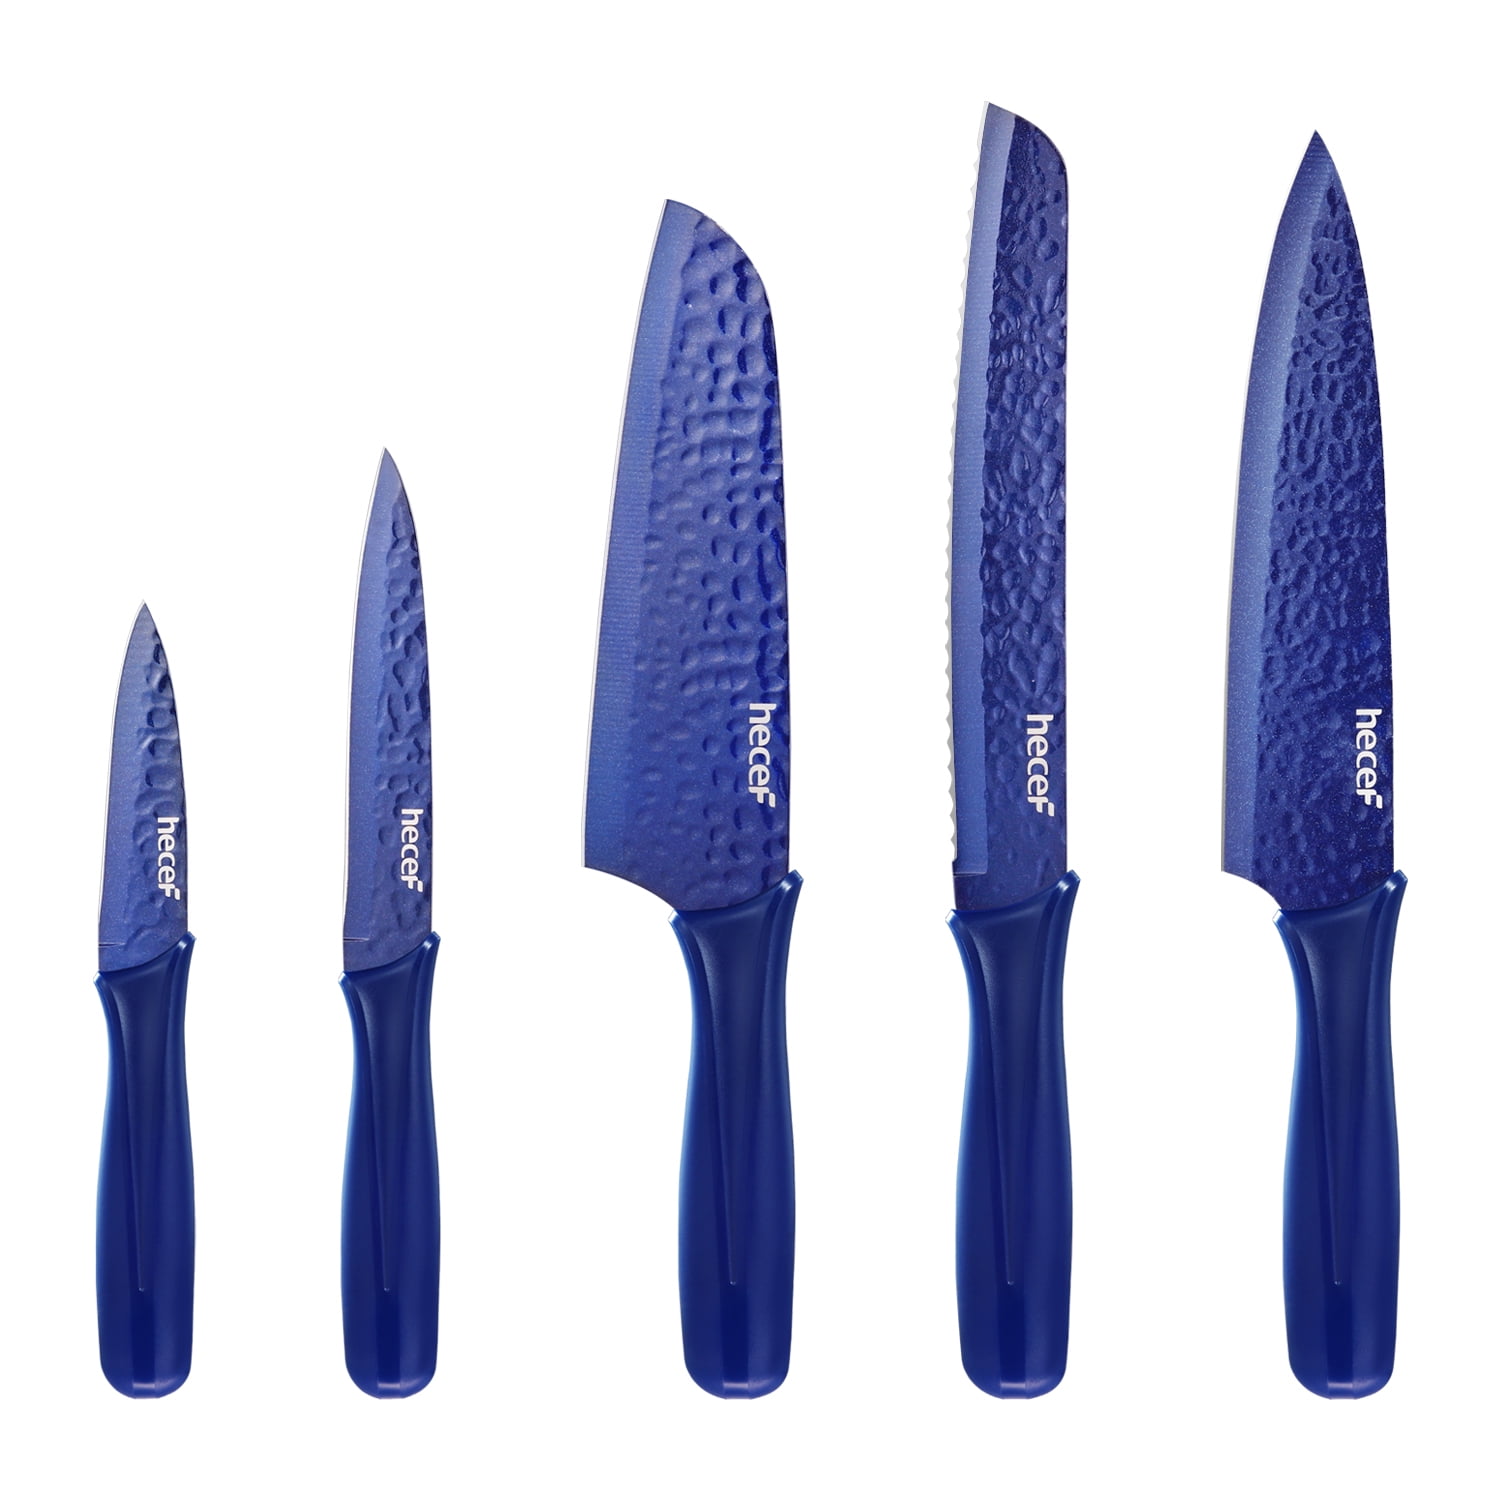 16-Piece Blue Japanese Knife Set with Removable Block - IMARKU